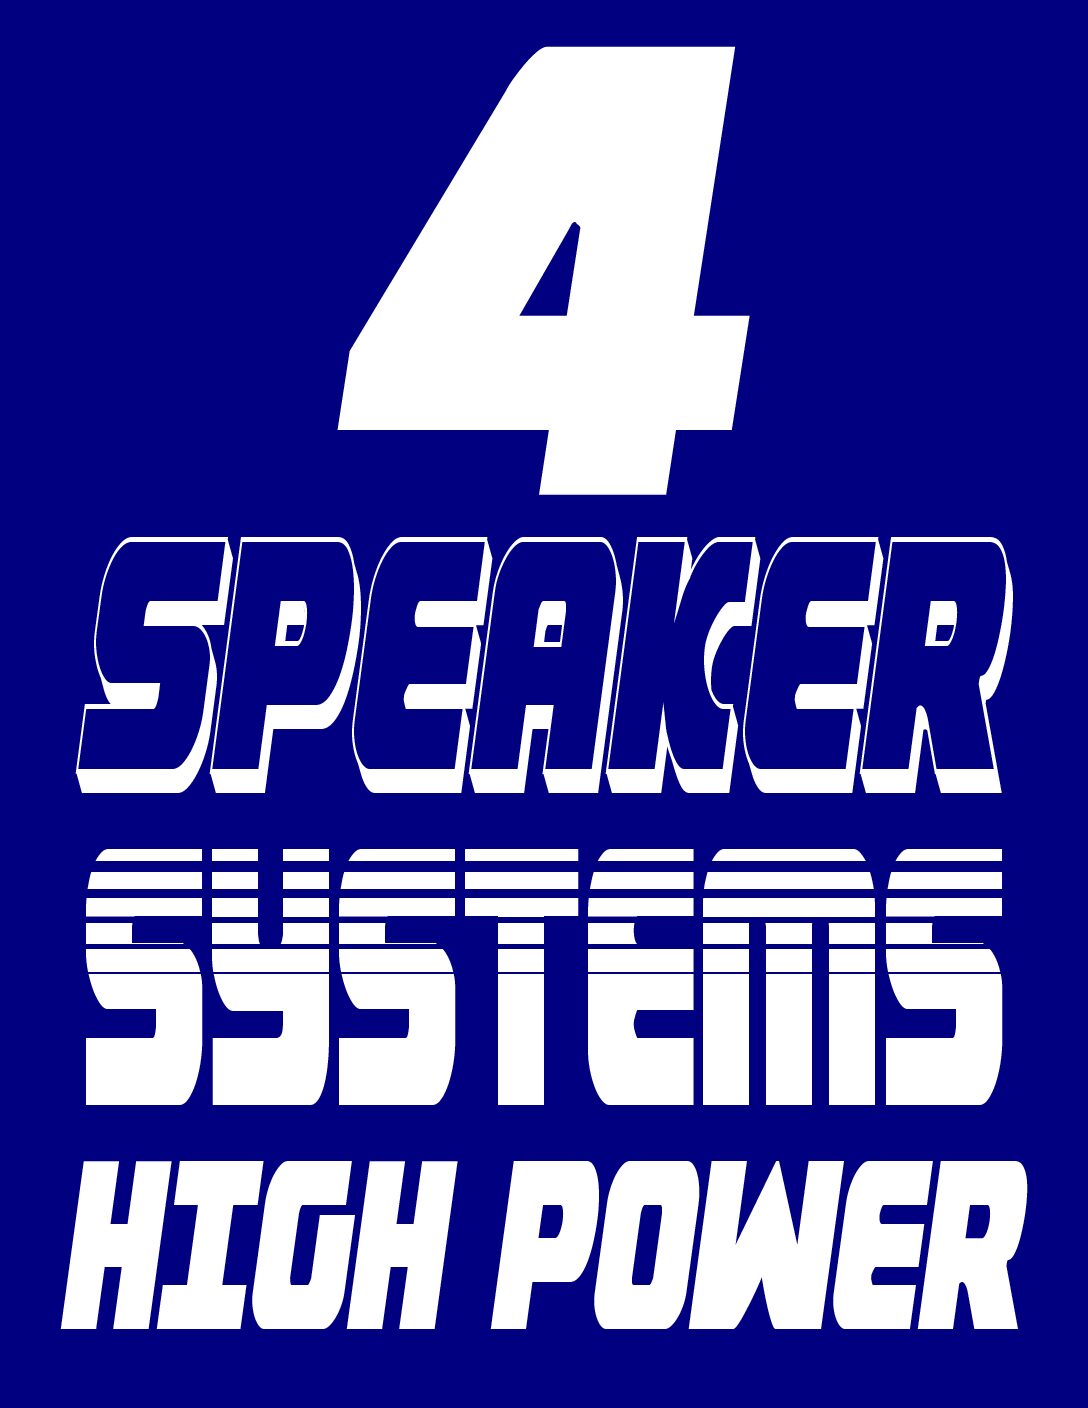 GENERAL 4 SPEAKER SYSTEMS HIGH POWER